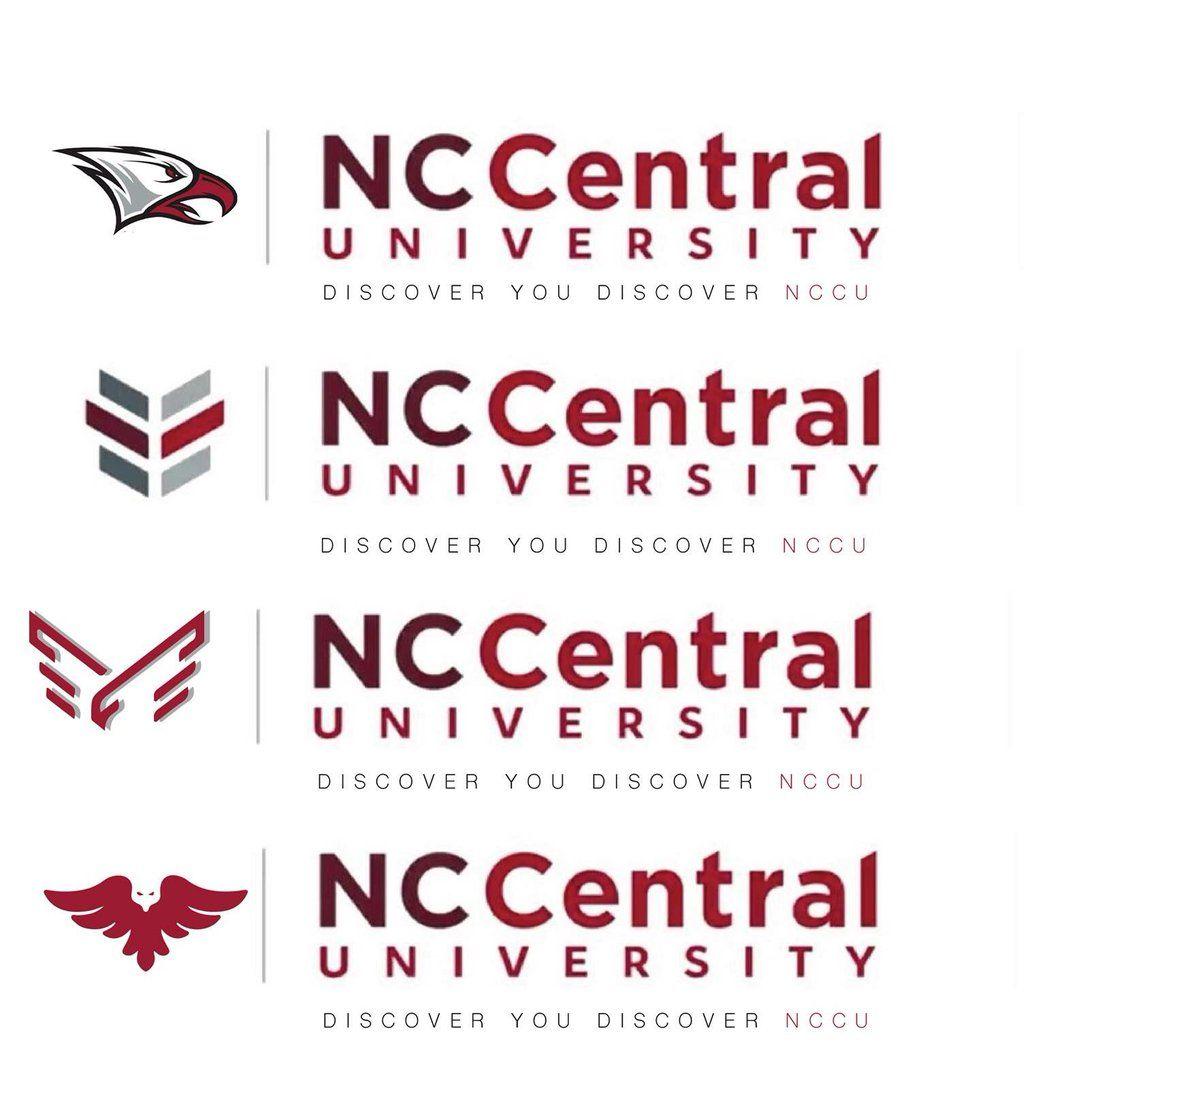 NCCU Logo - Rebranding has students and alumni clamoring for less change ...